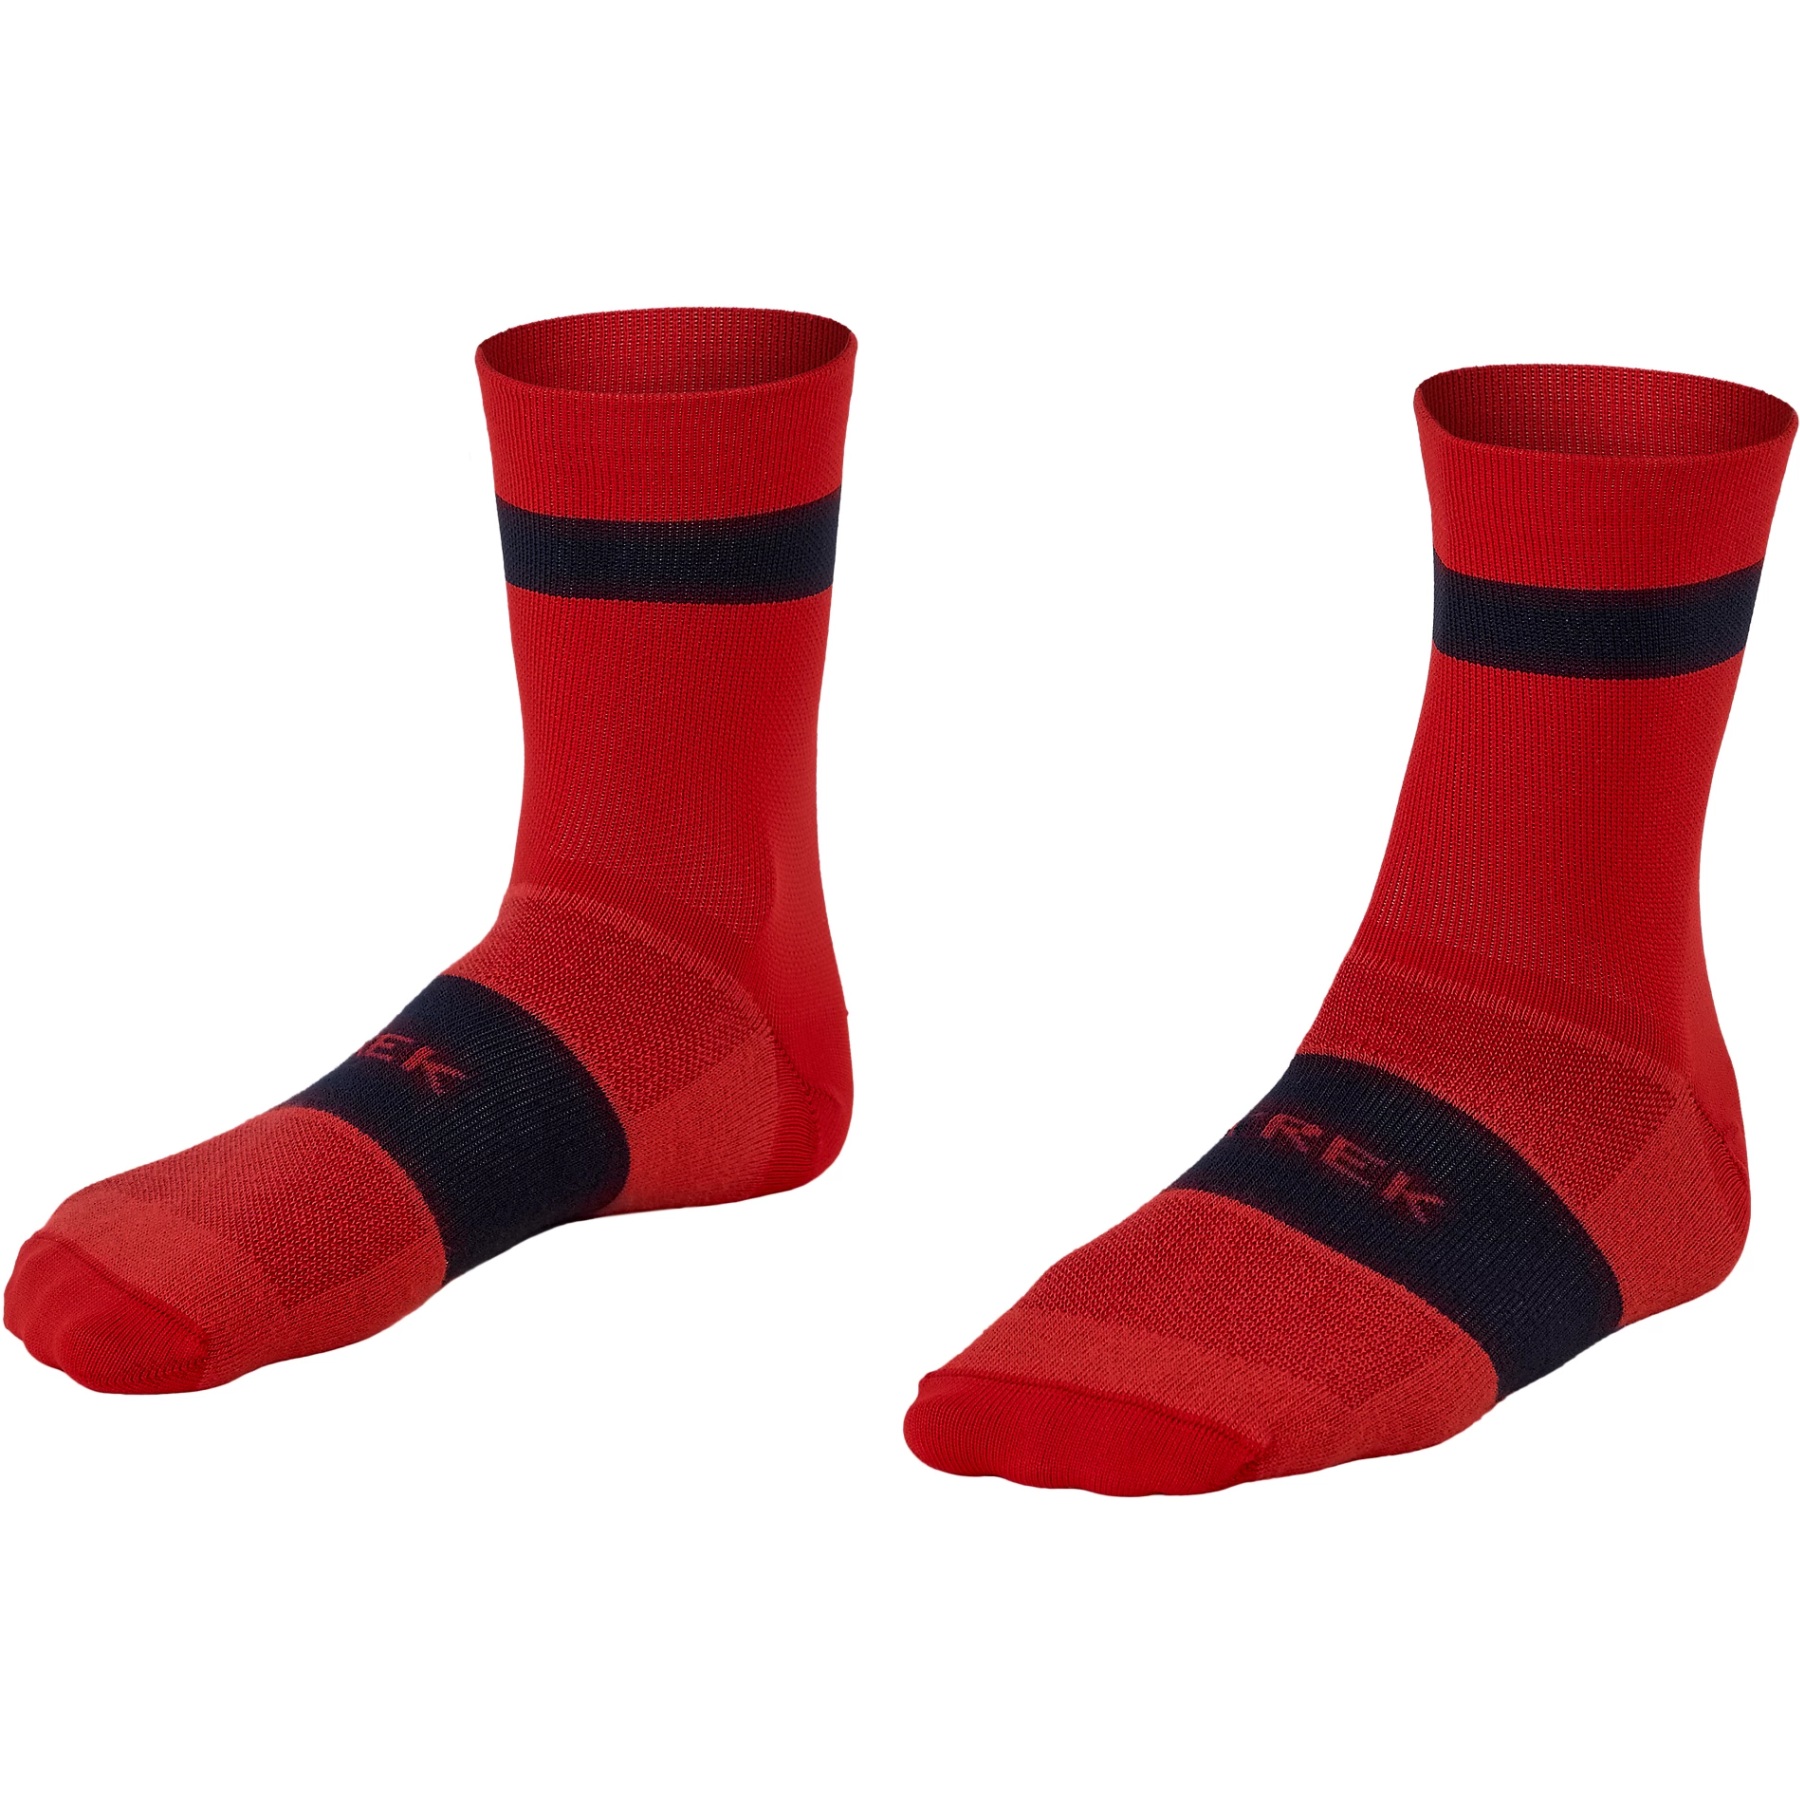 Productfoto van Trek Race Quarter Cycling Socks - Viper Red